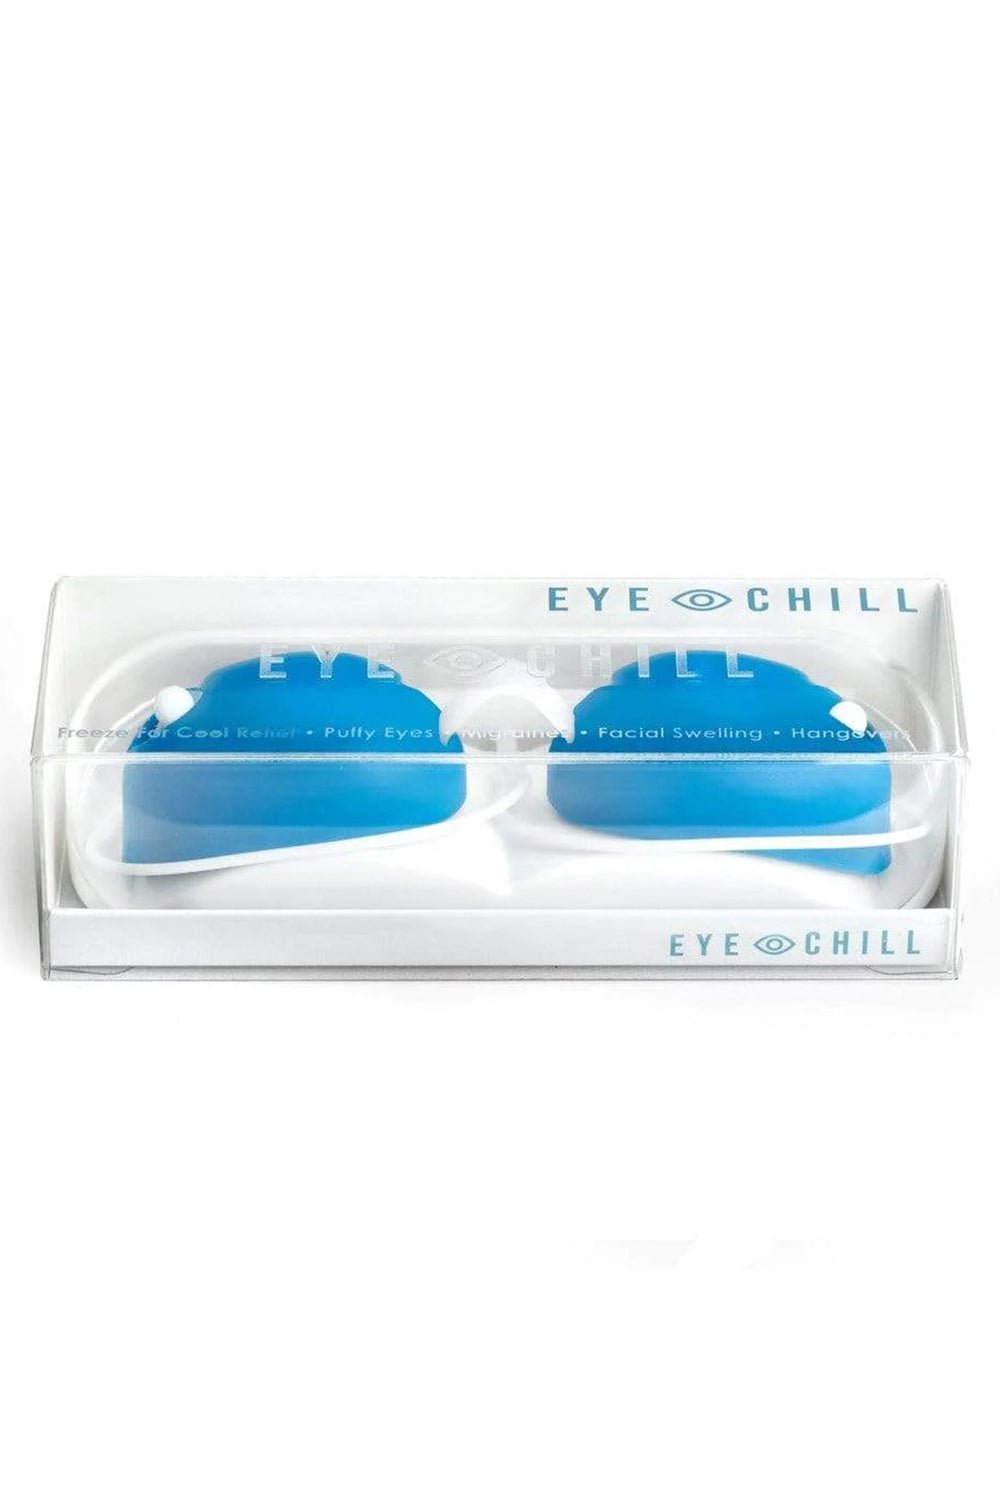 The Eye Chill BEAUTYSKINCARE EYECHILL, LLC   